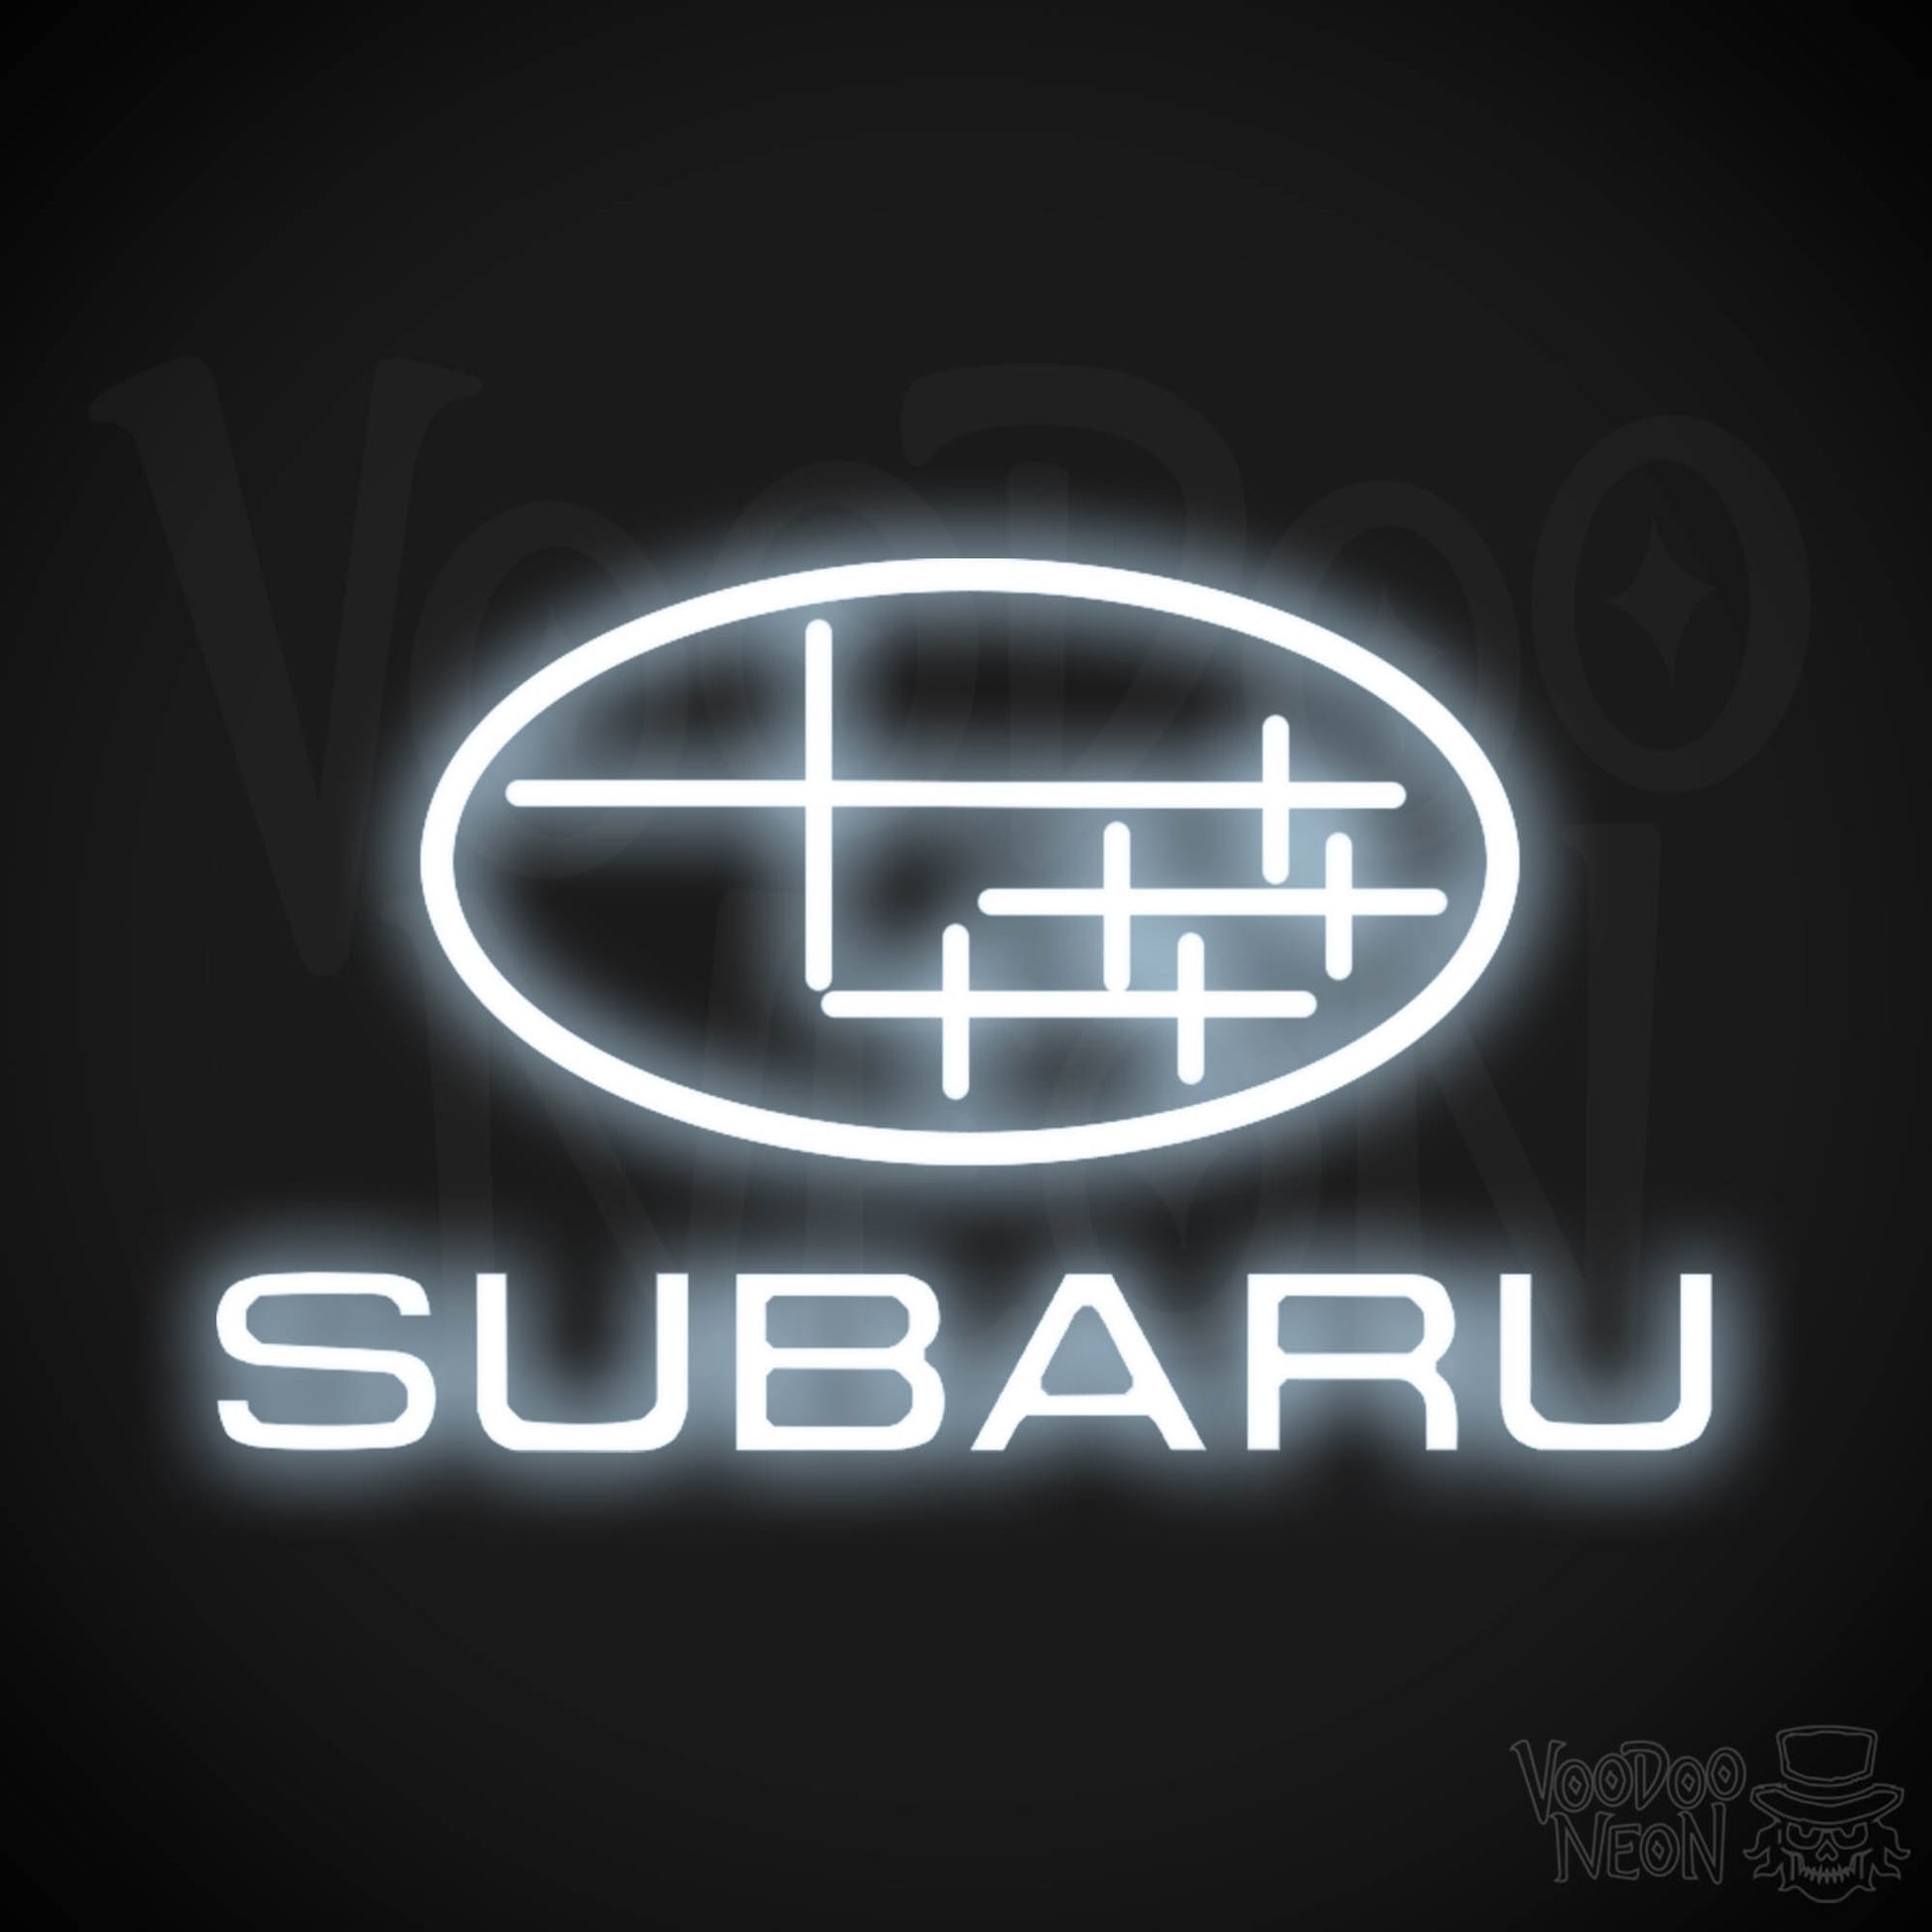 Subaru Neon Sign - Subaru Sign - Subaru Decor - Wall Art - Color Cool White